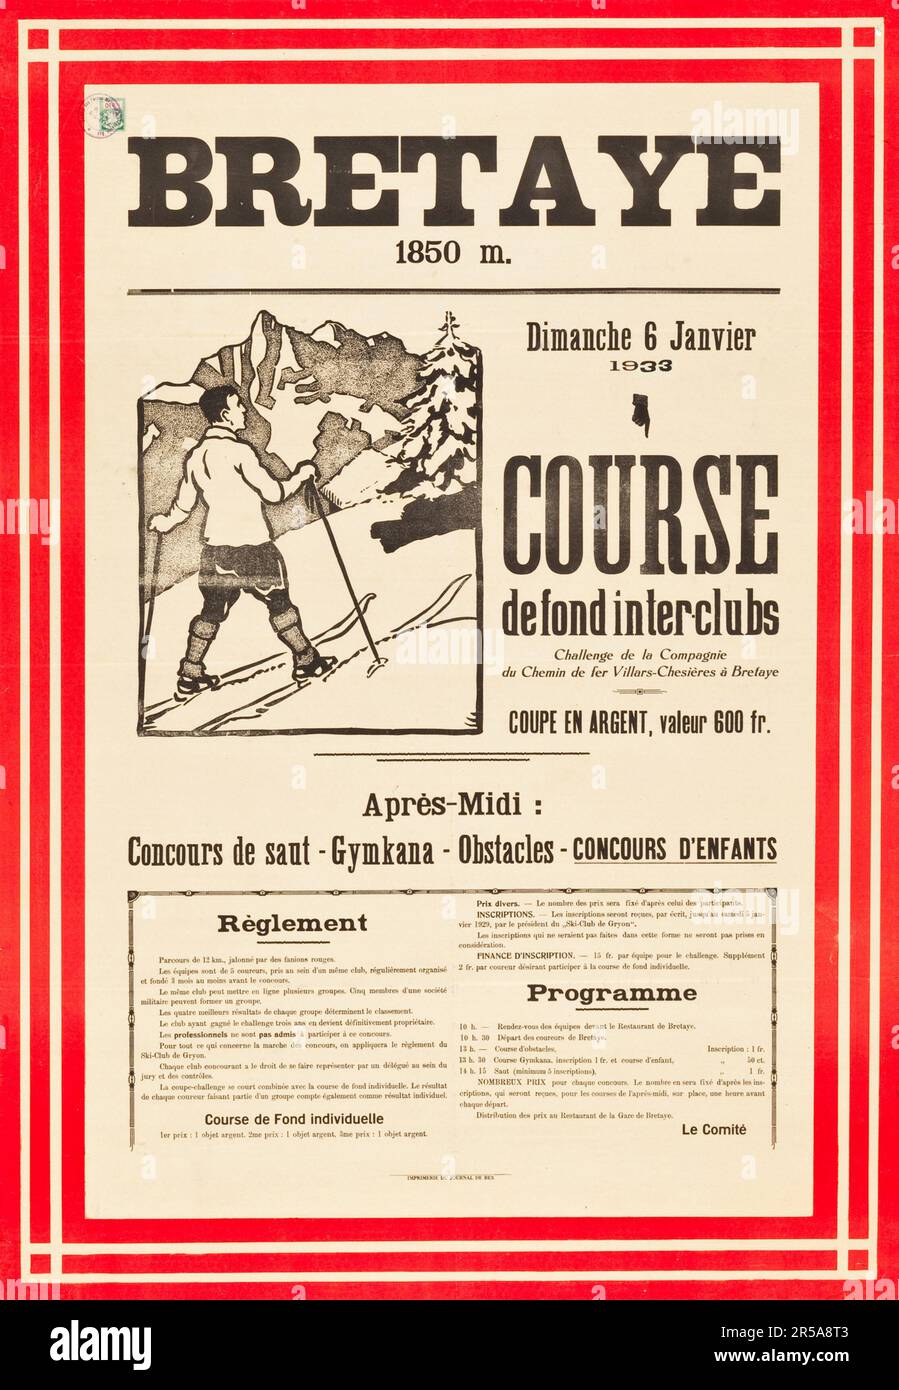 Bretaye, Course defond interclubs - Ski competition. Switzerland Travel Posters (1929) Unknown artist. Stock Photo